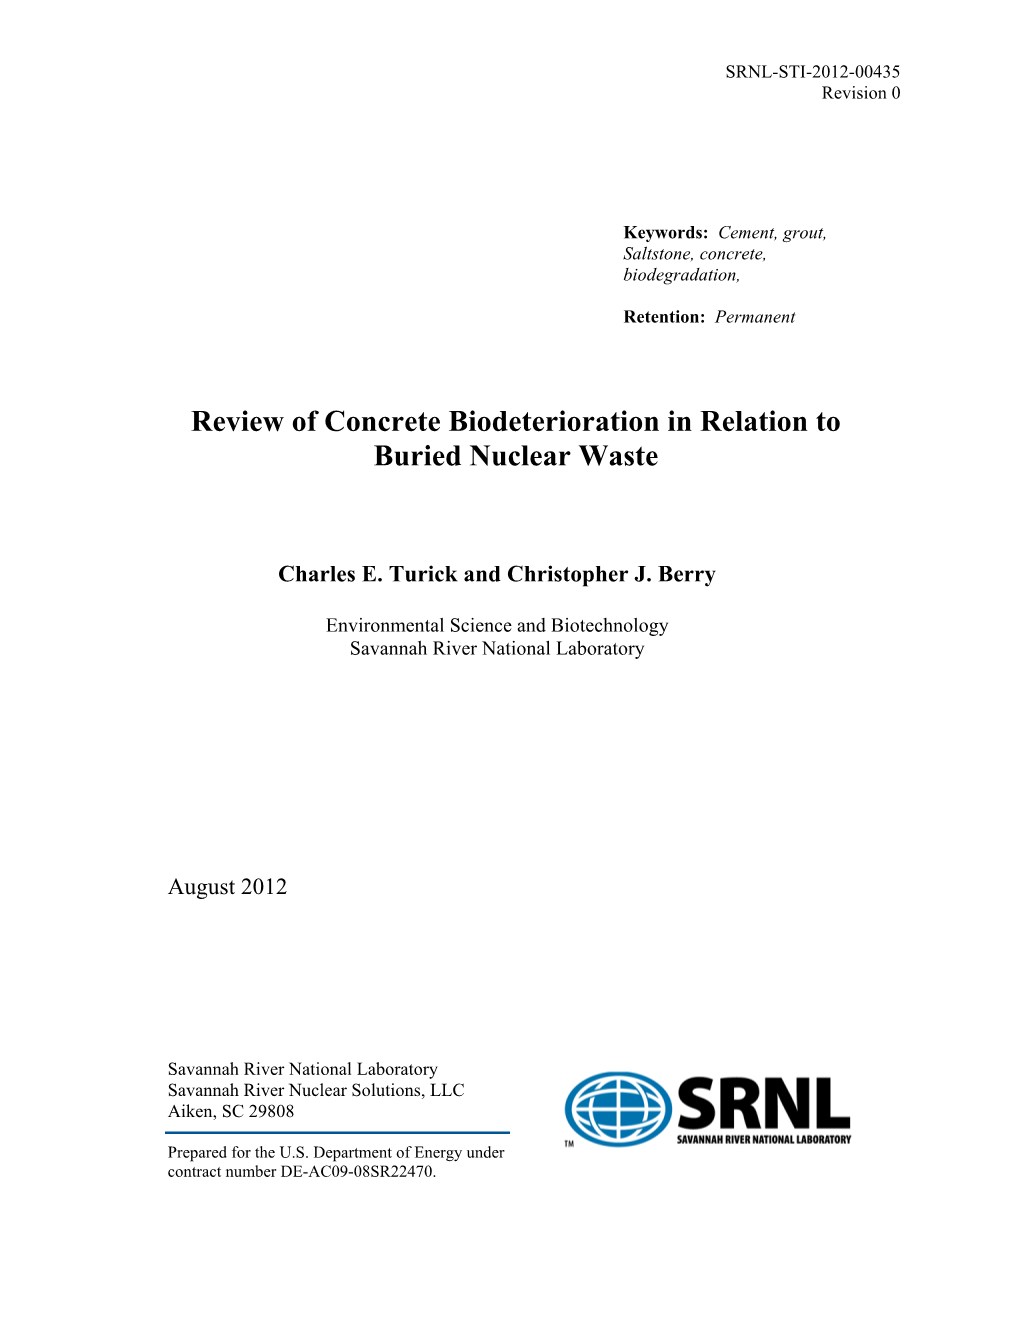 SRNL-STI-2012-00435, Review of Concrete Biodeterioration In